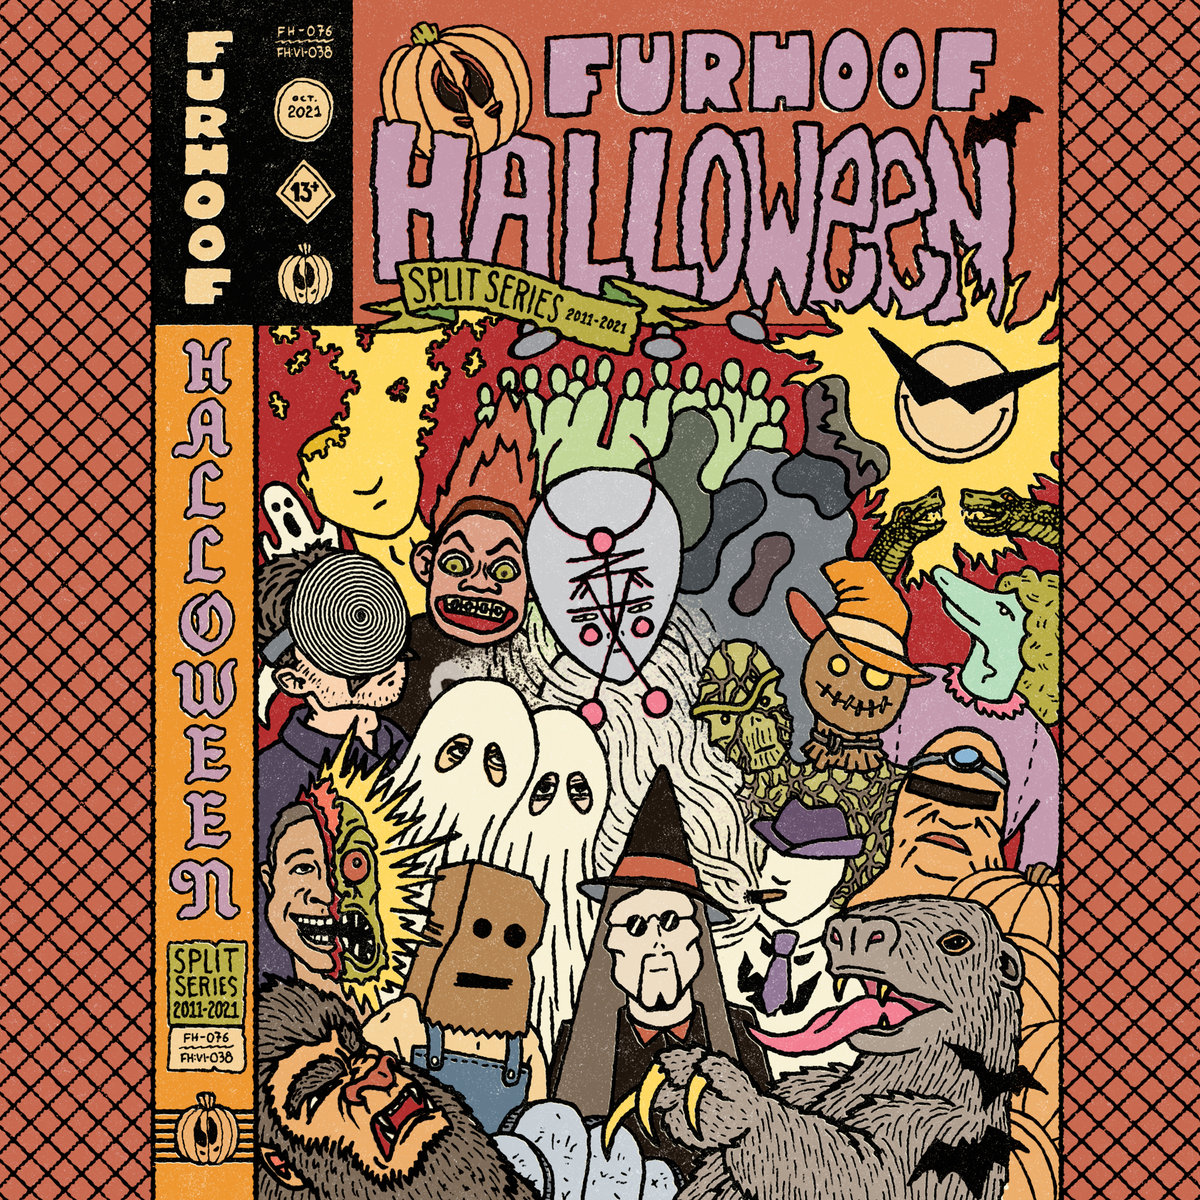 Furhoof Halloween Split Series: 2011​-​2021 album art - illustration of cartoon monsters